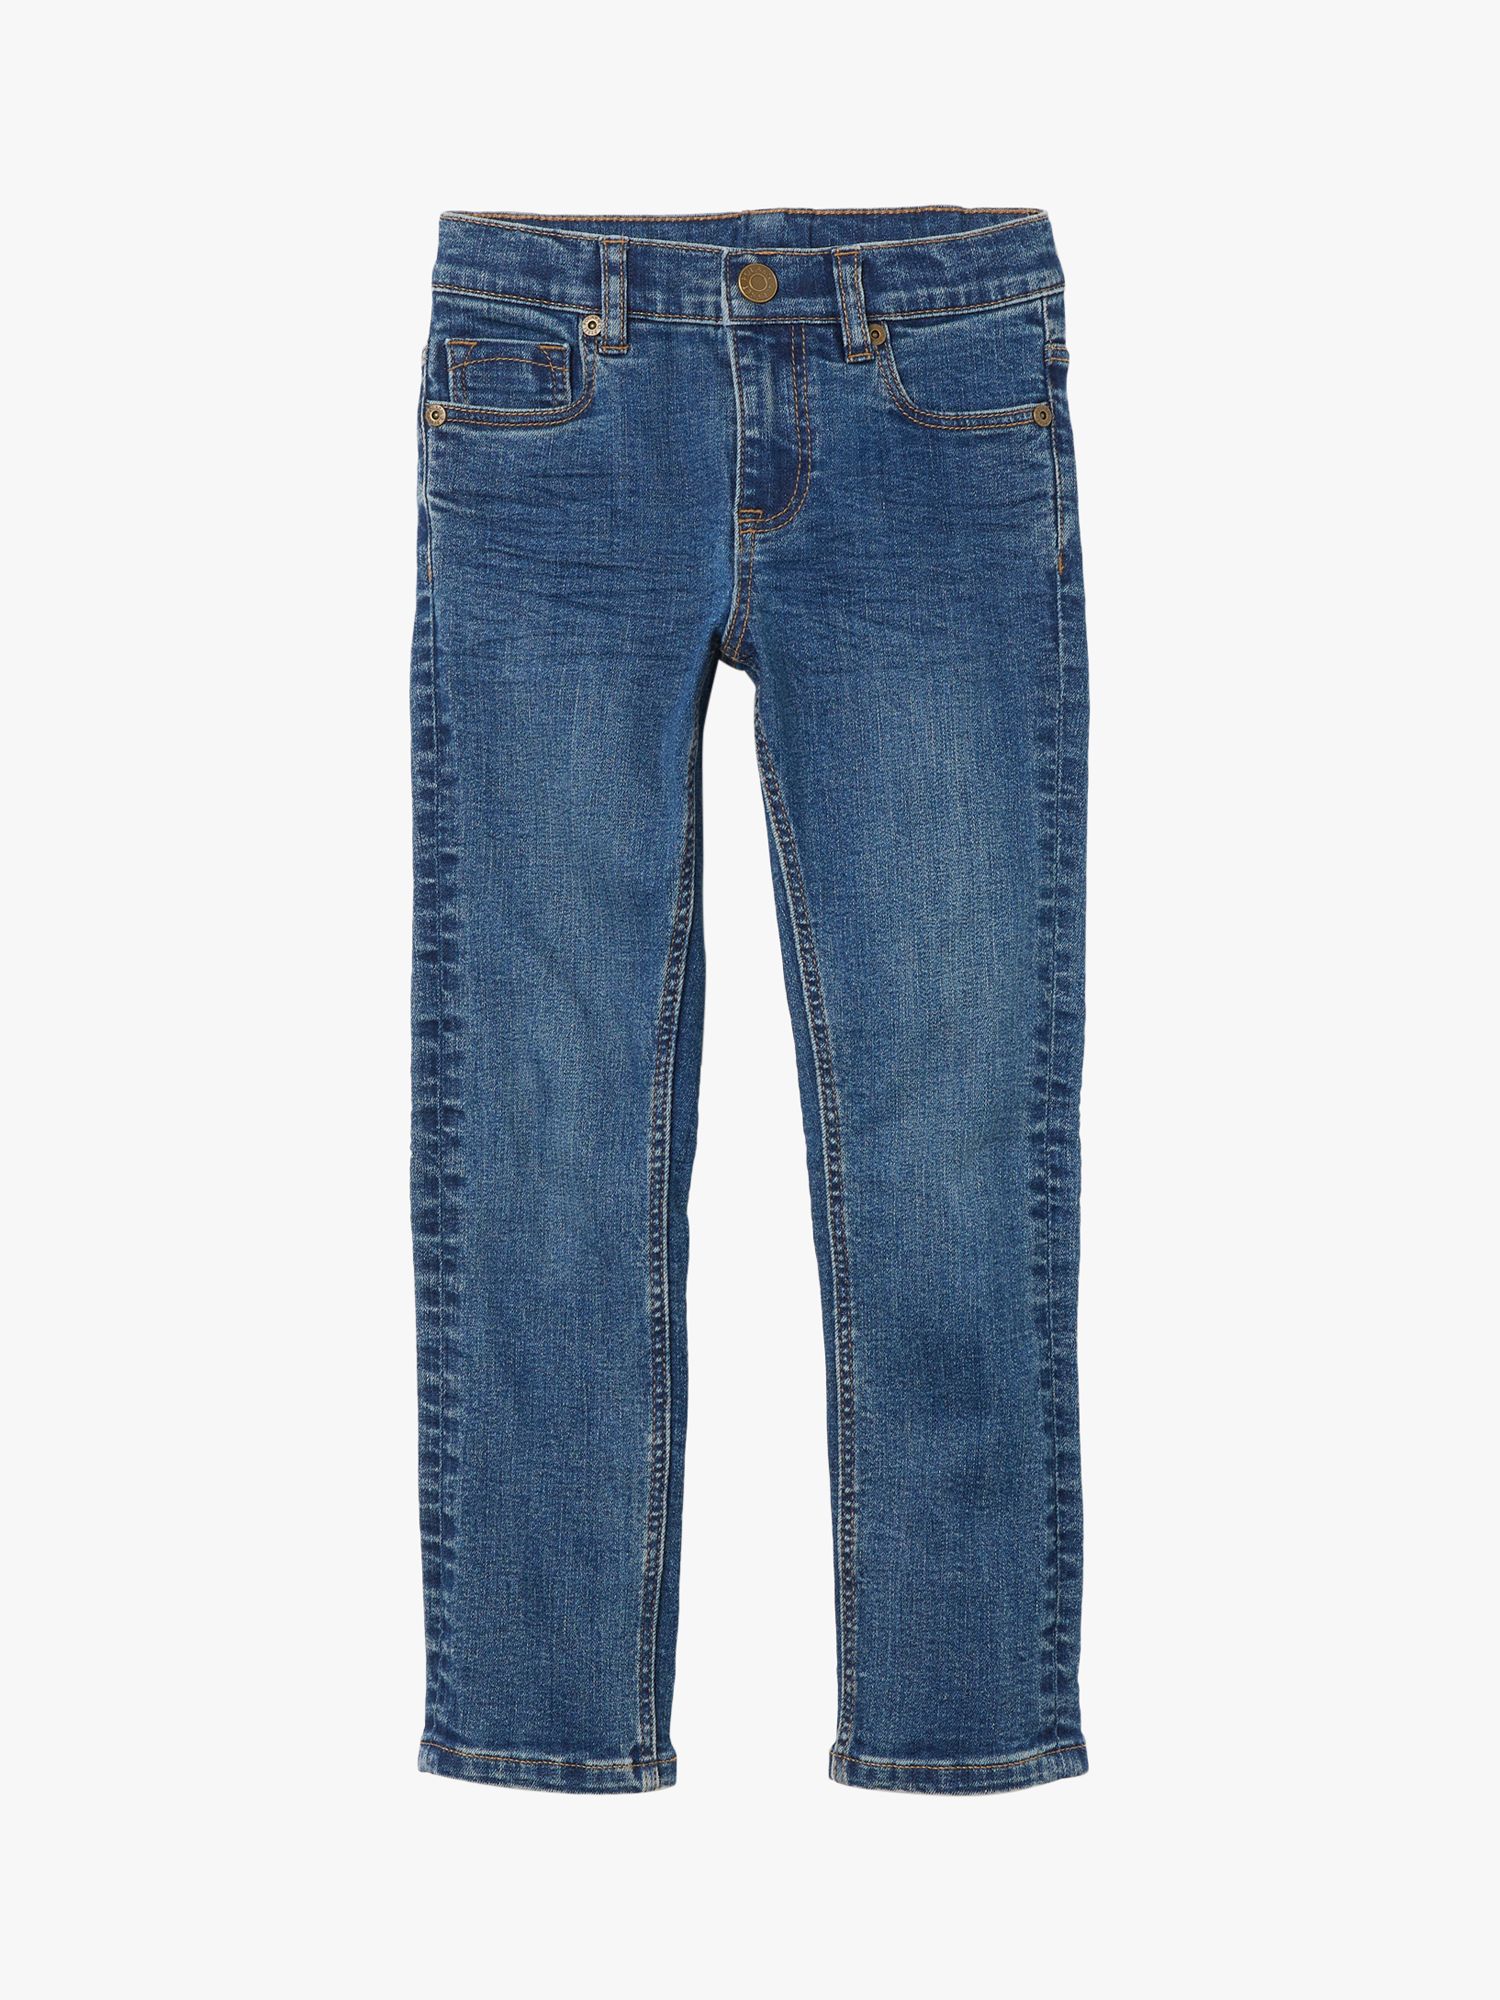 Polarn O. Pyret Kids' Slim Fit Organic Cotton Blend Jeans, Blue, 2-3 years